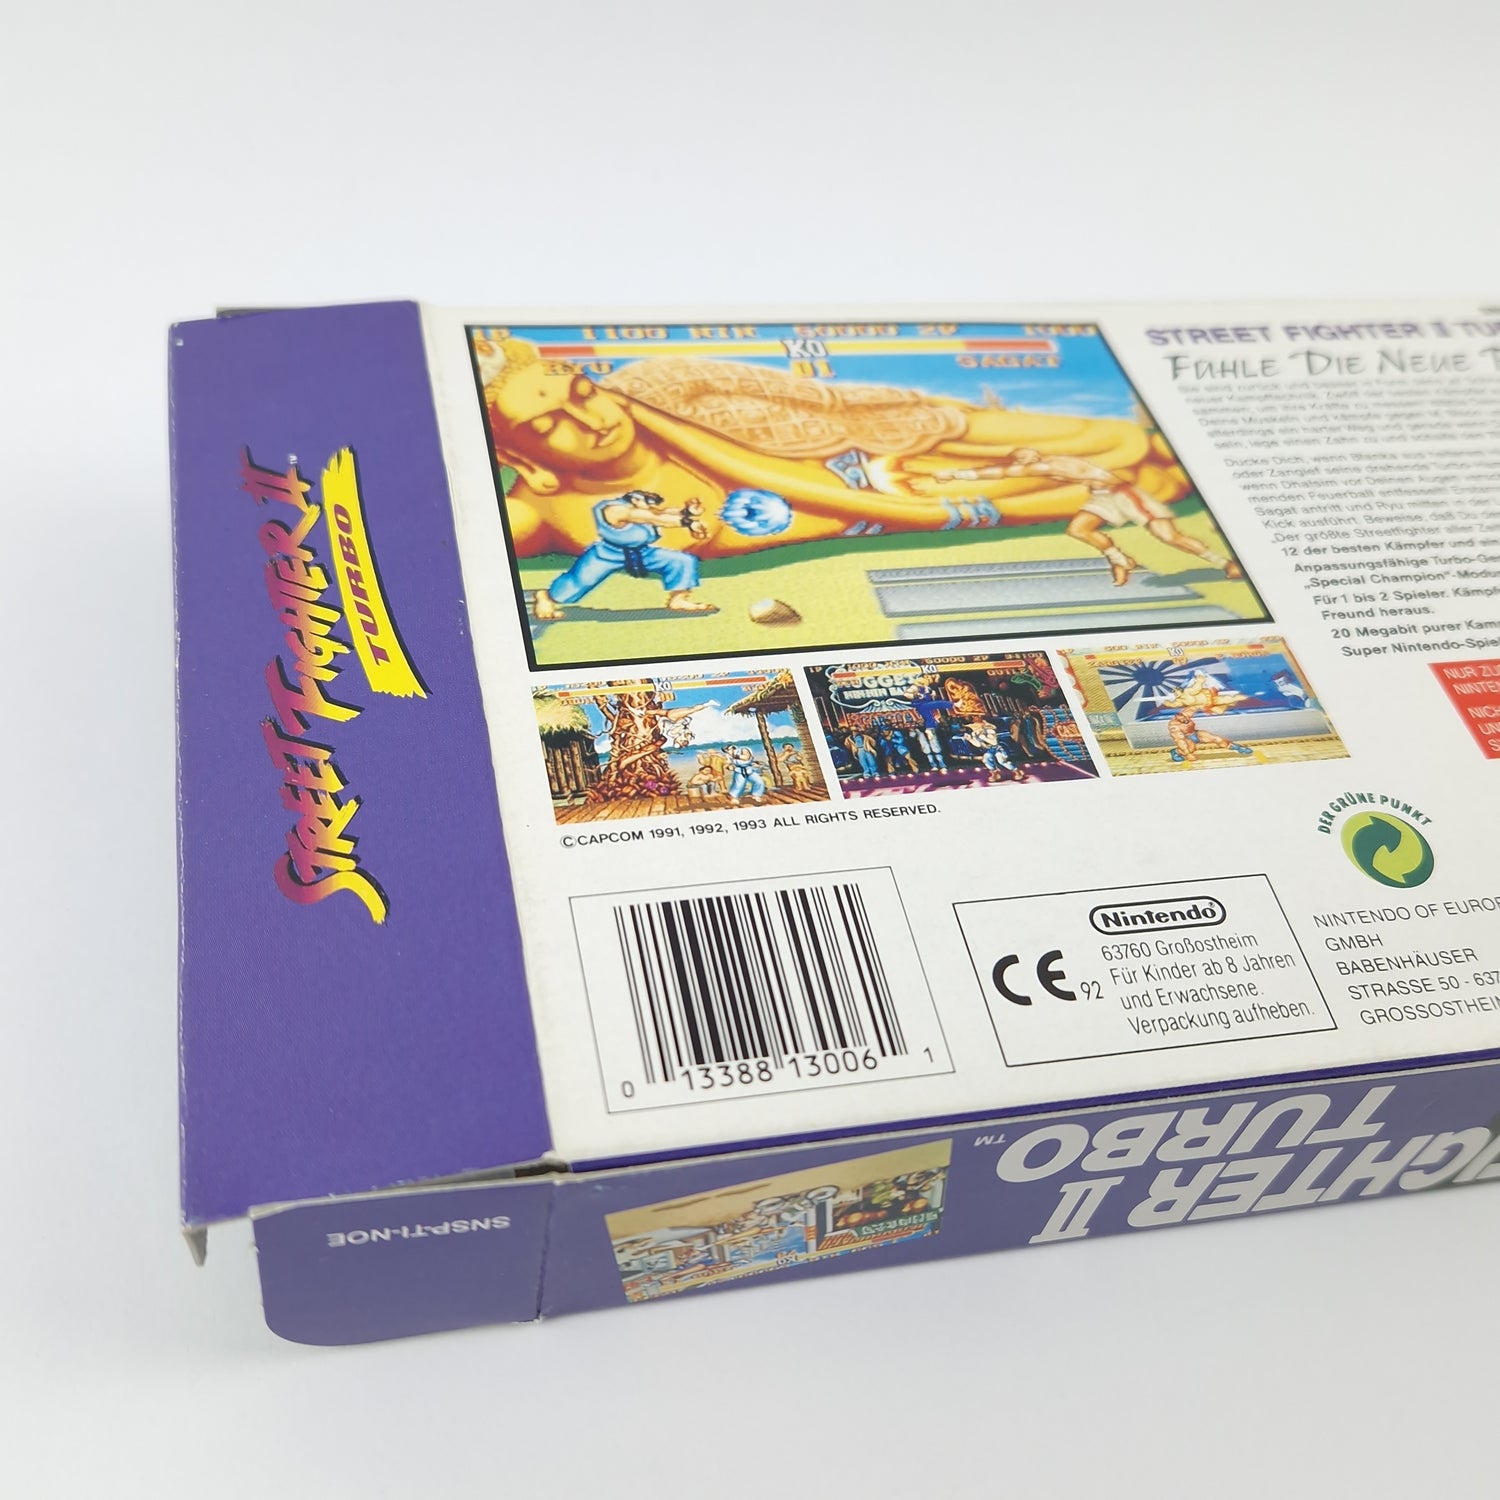 Super Nintendo game: Street Fighter II TURBO - Module instructions OVP cib / SNES